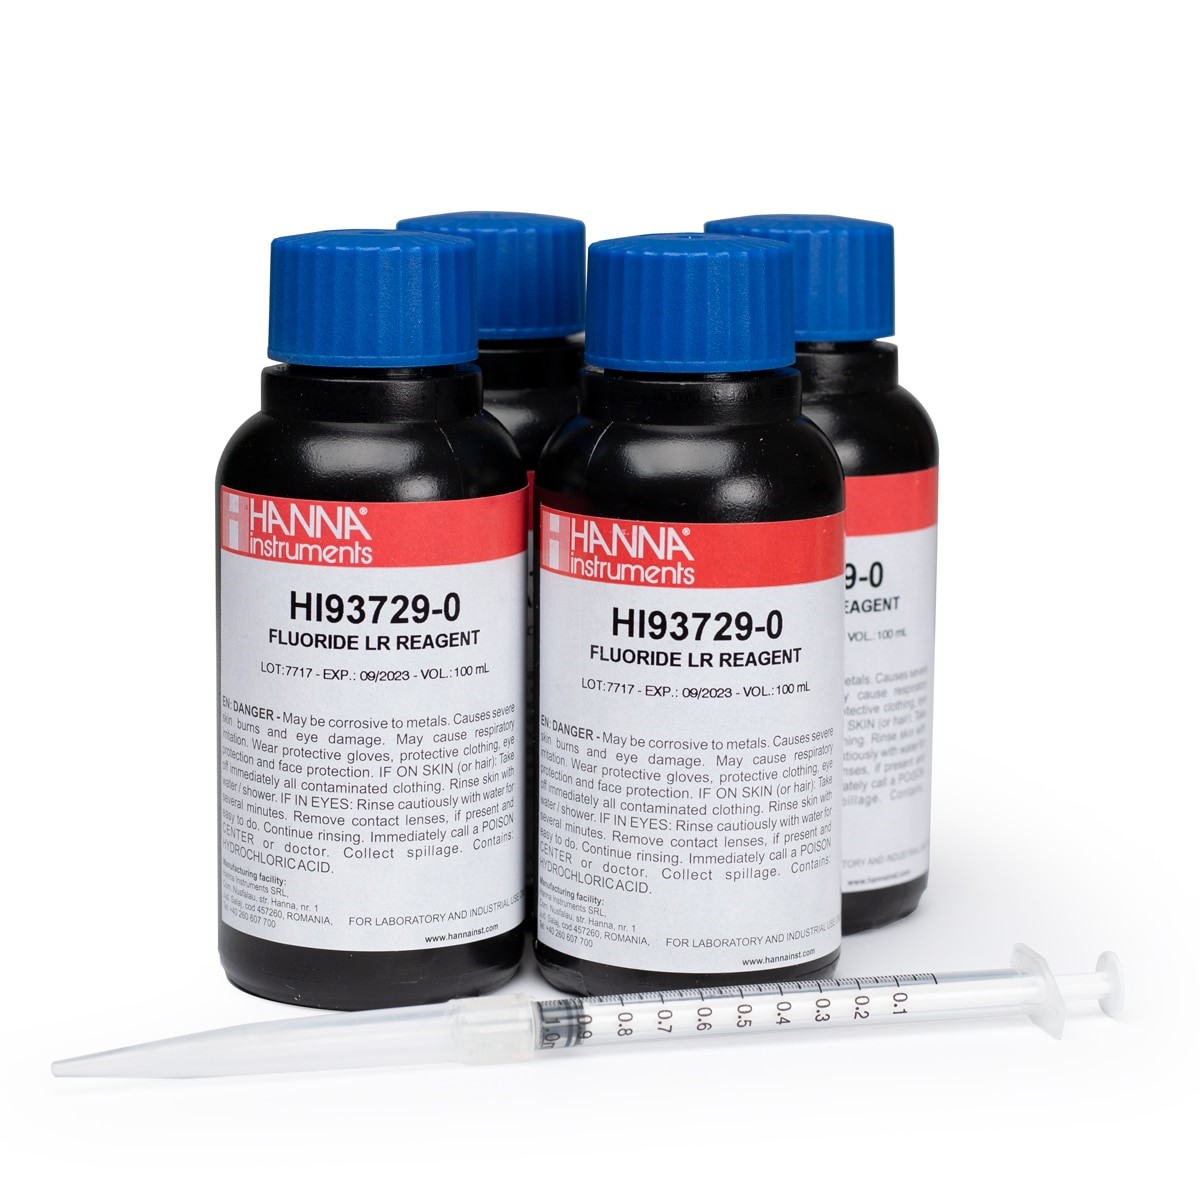 HI93729-03 Fluoride Low Range Reagents (300 tests)